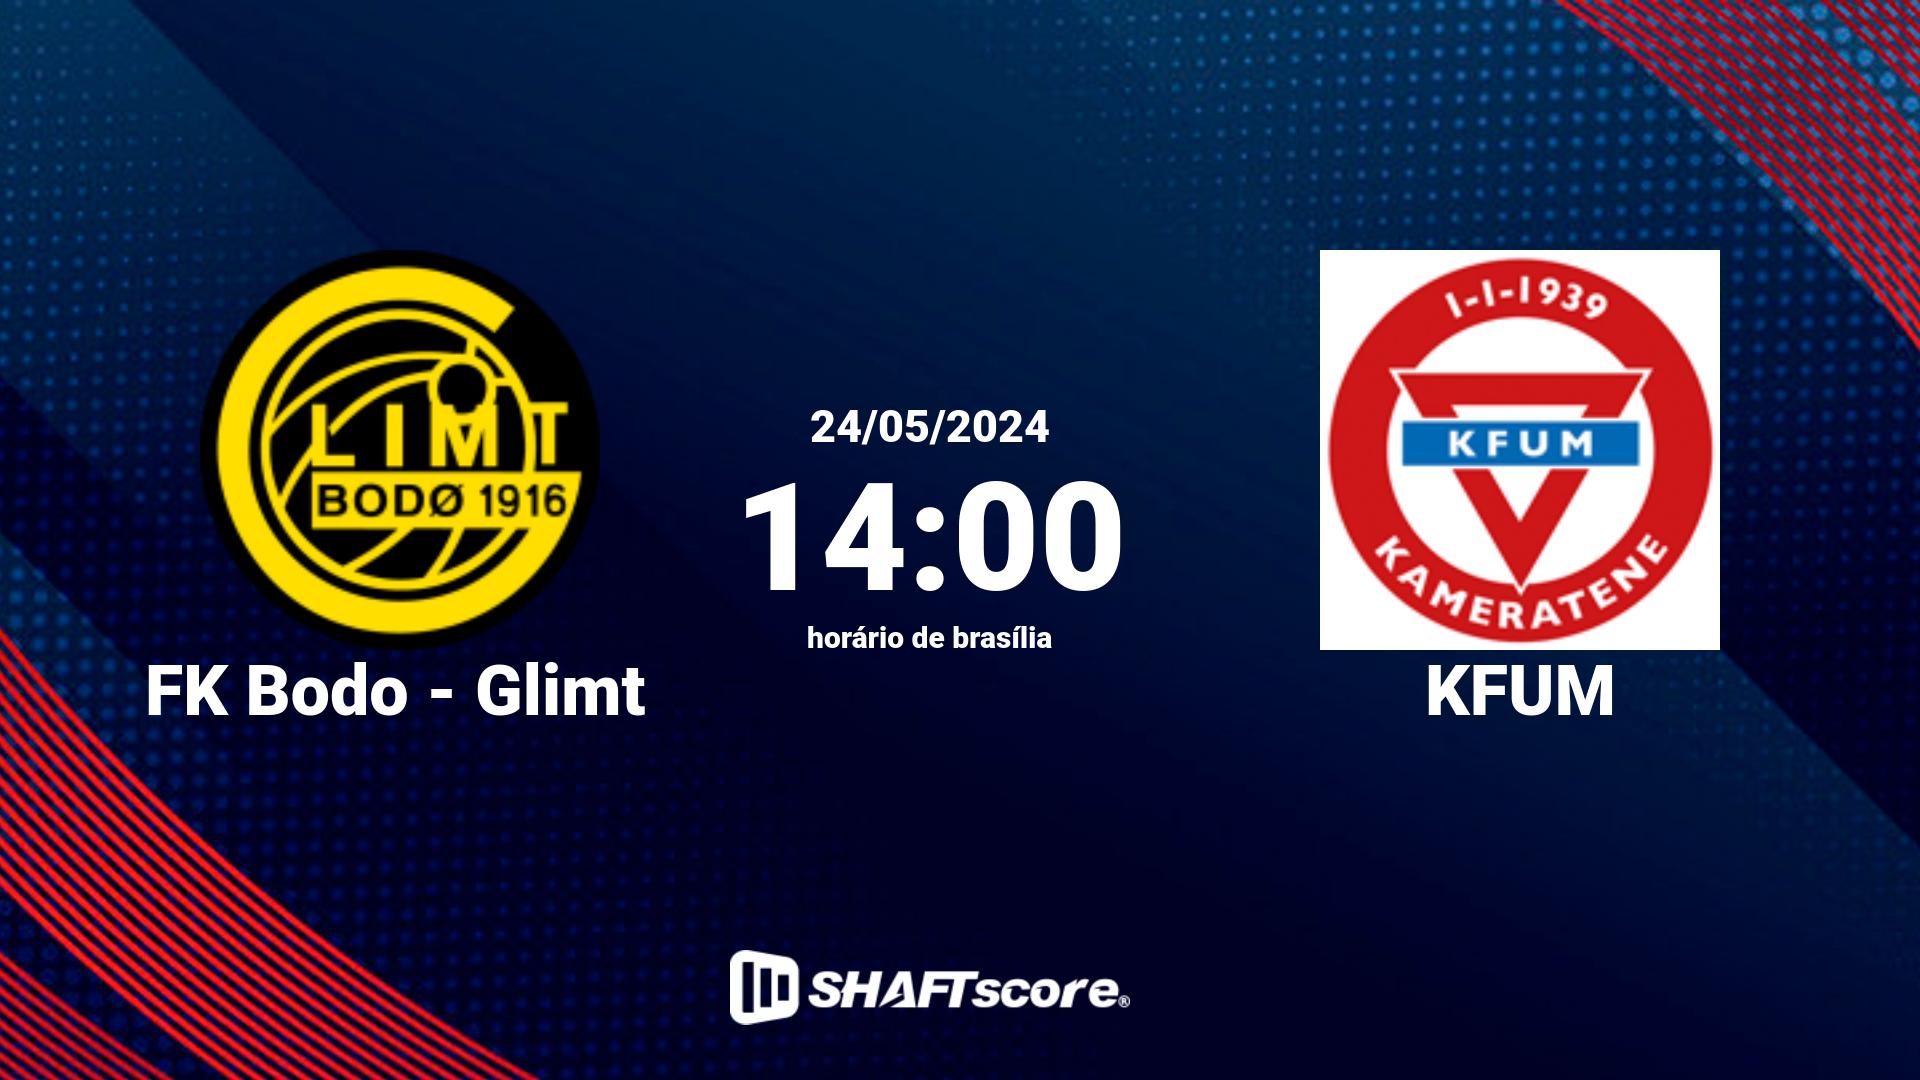 Estatísticas do jogo FK Bodo - Glimt vs KFUM 24.05 14:00